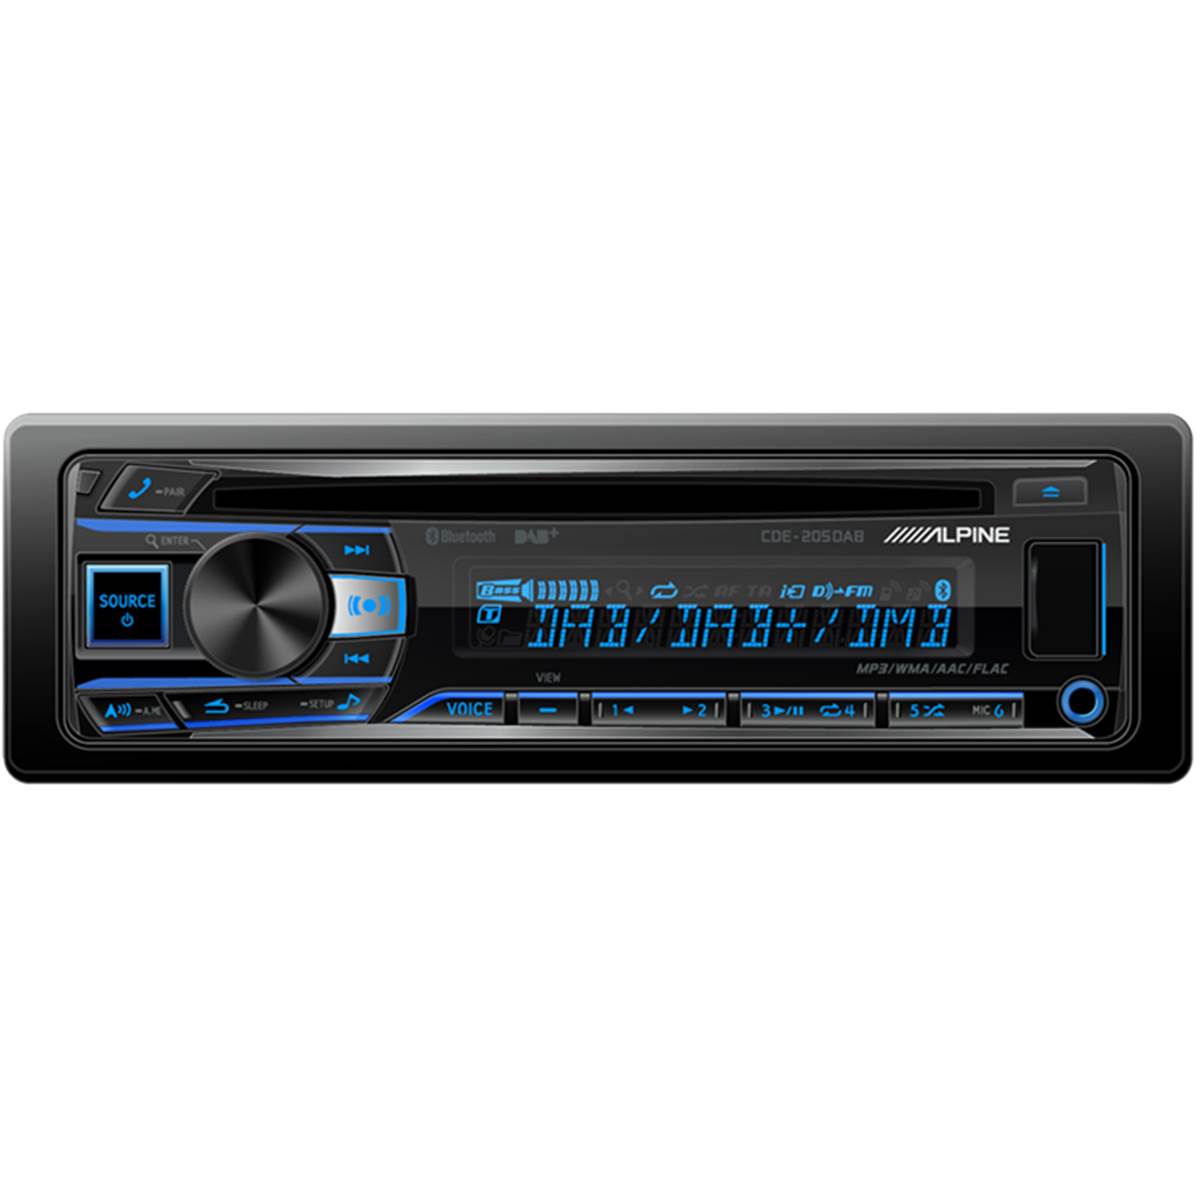 Autoradio Cde-205dab Cd Dab Bluetooth Alpine